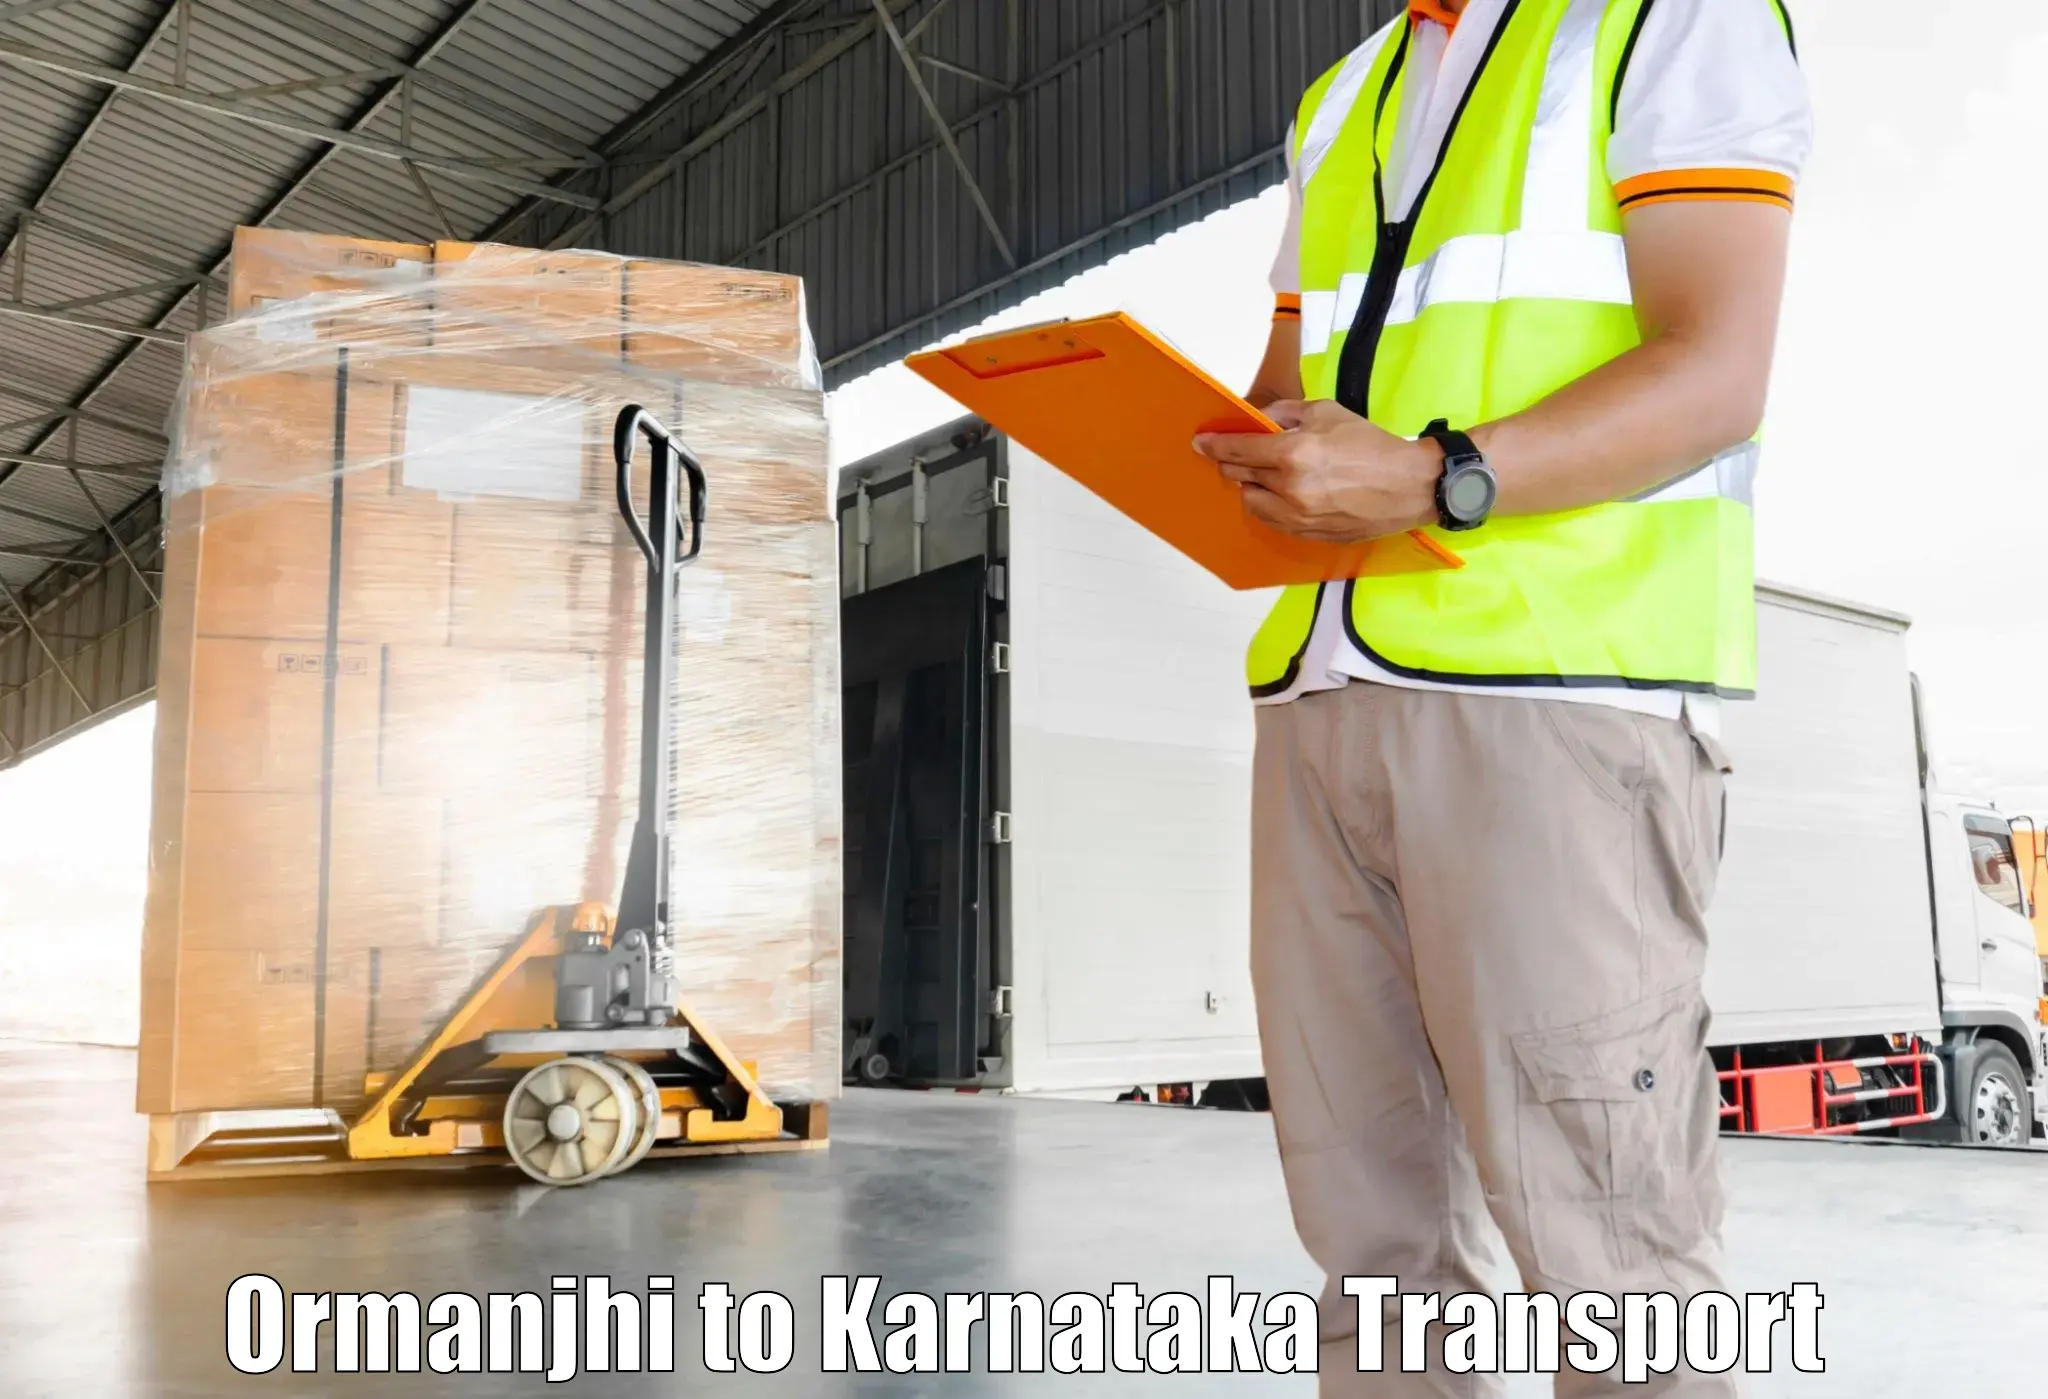 Transport in sharing Ormanjhi to Bangalore